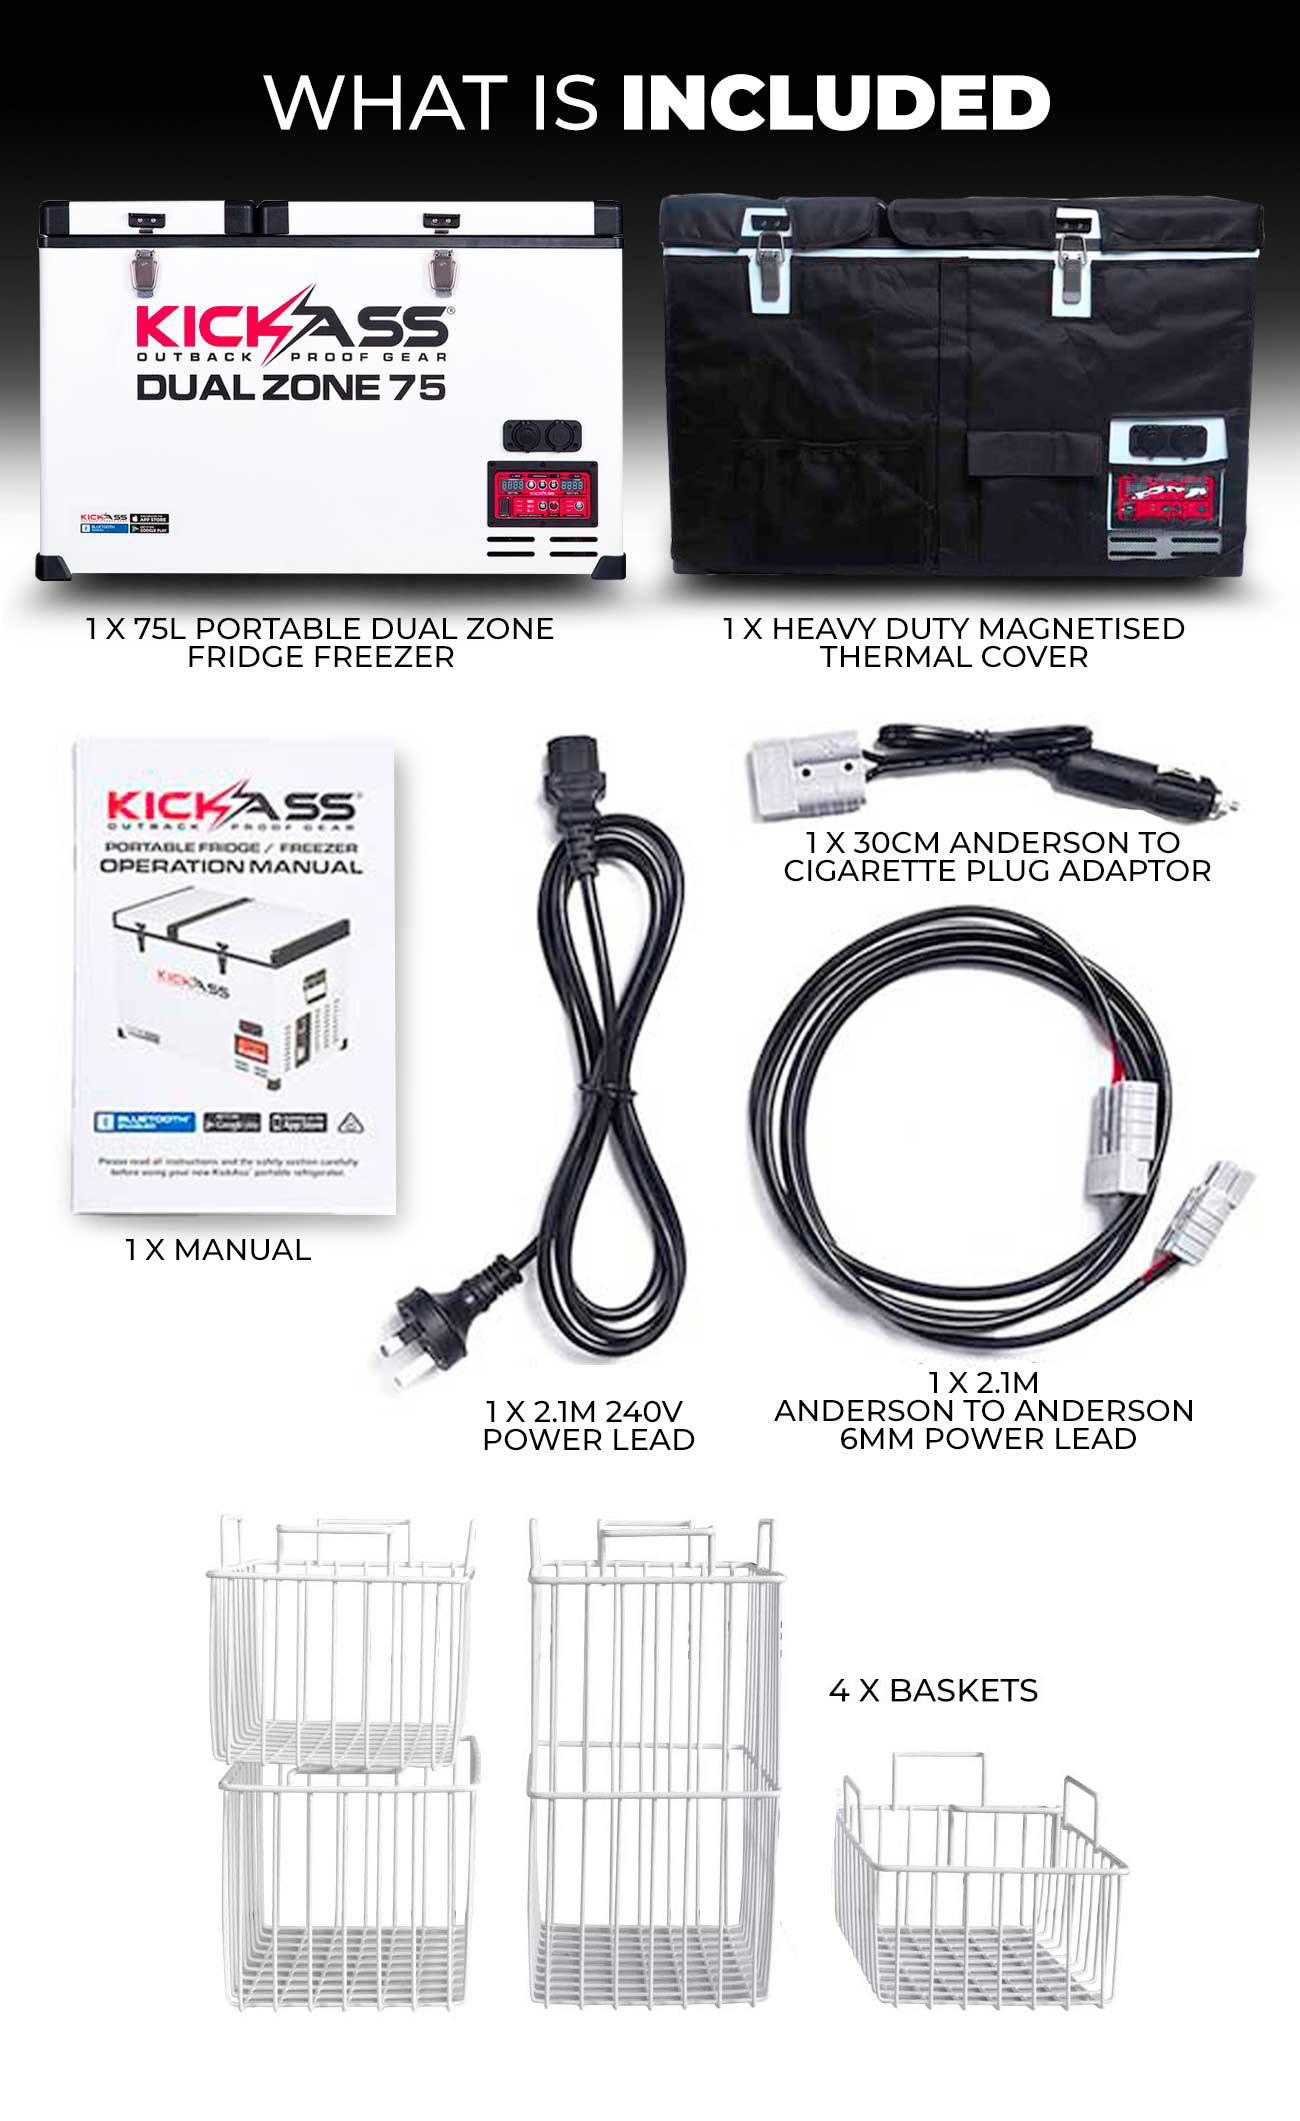 KICKASS Portable Fridge Freezer Dual Zone 75L - What's included